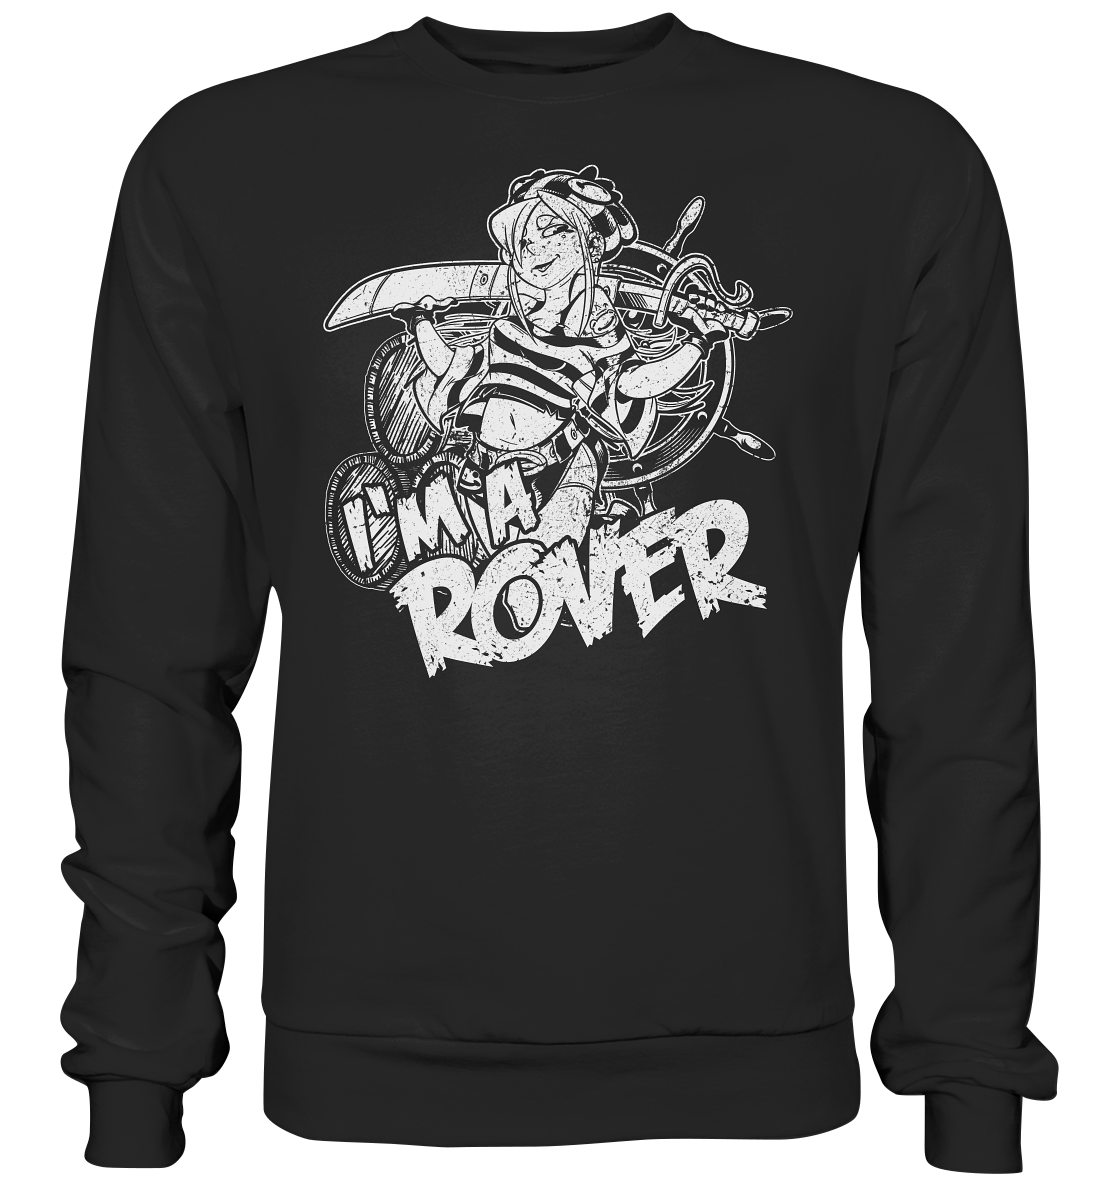 I'm A Rover "Girl" - Premium Sweatshirt